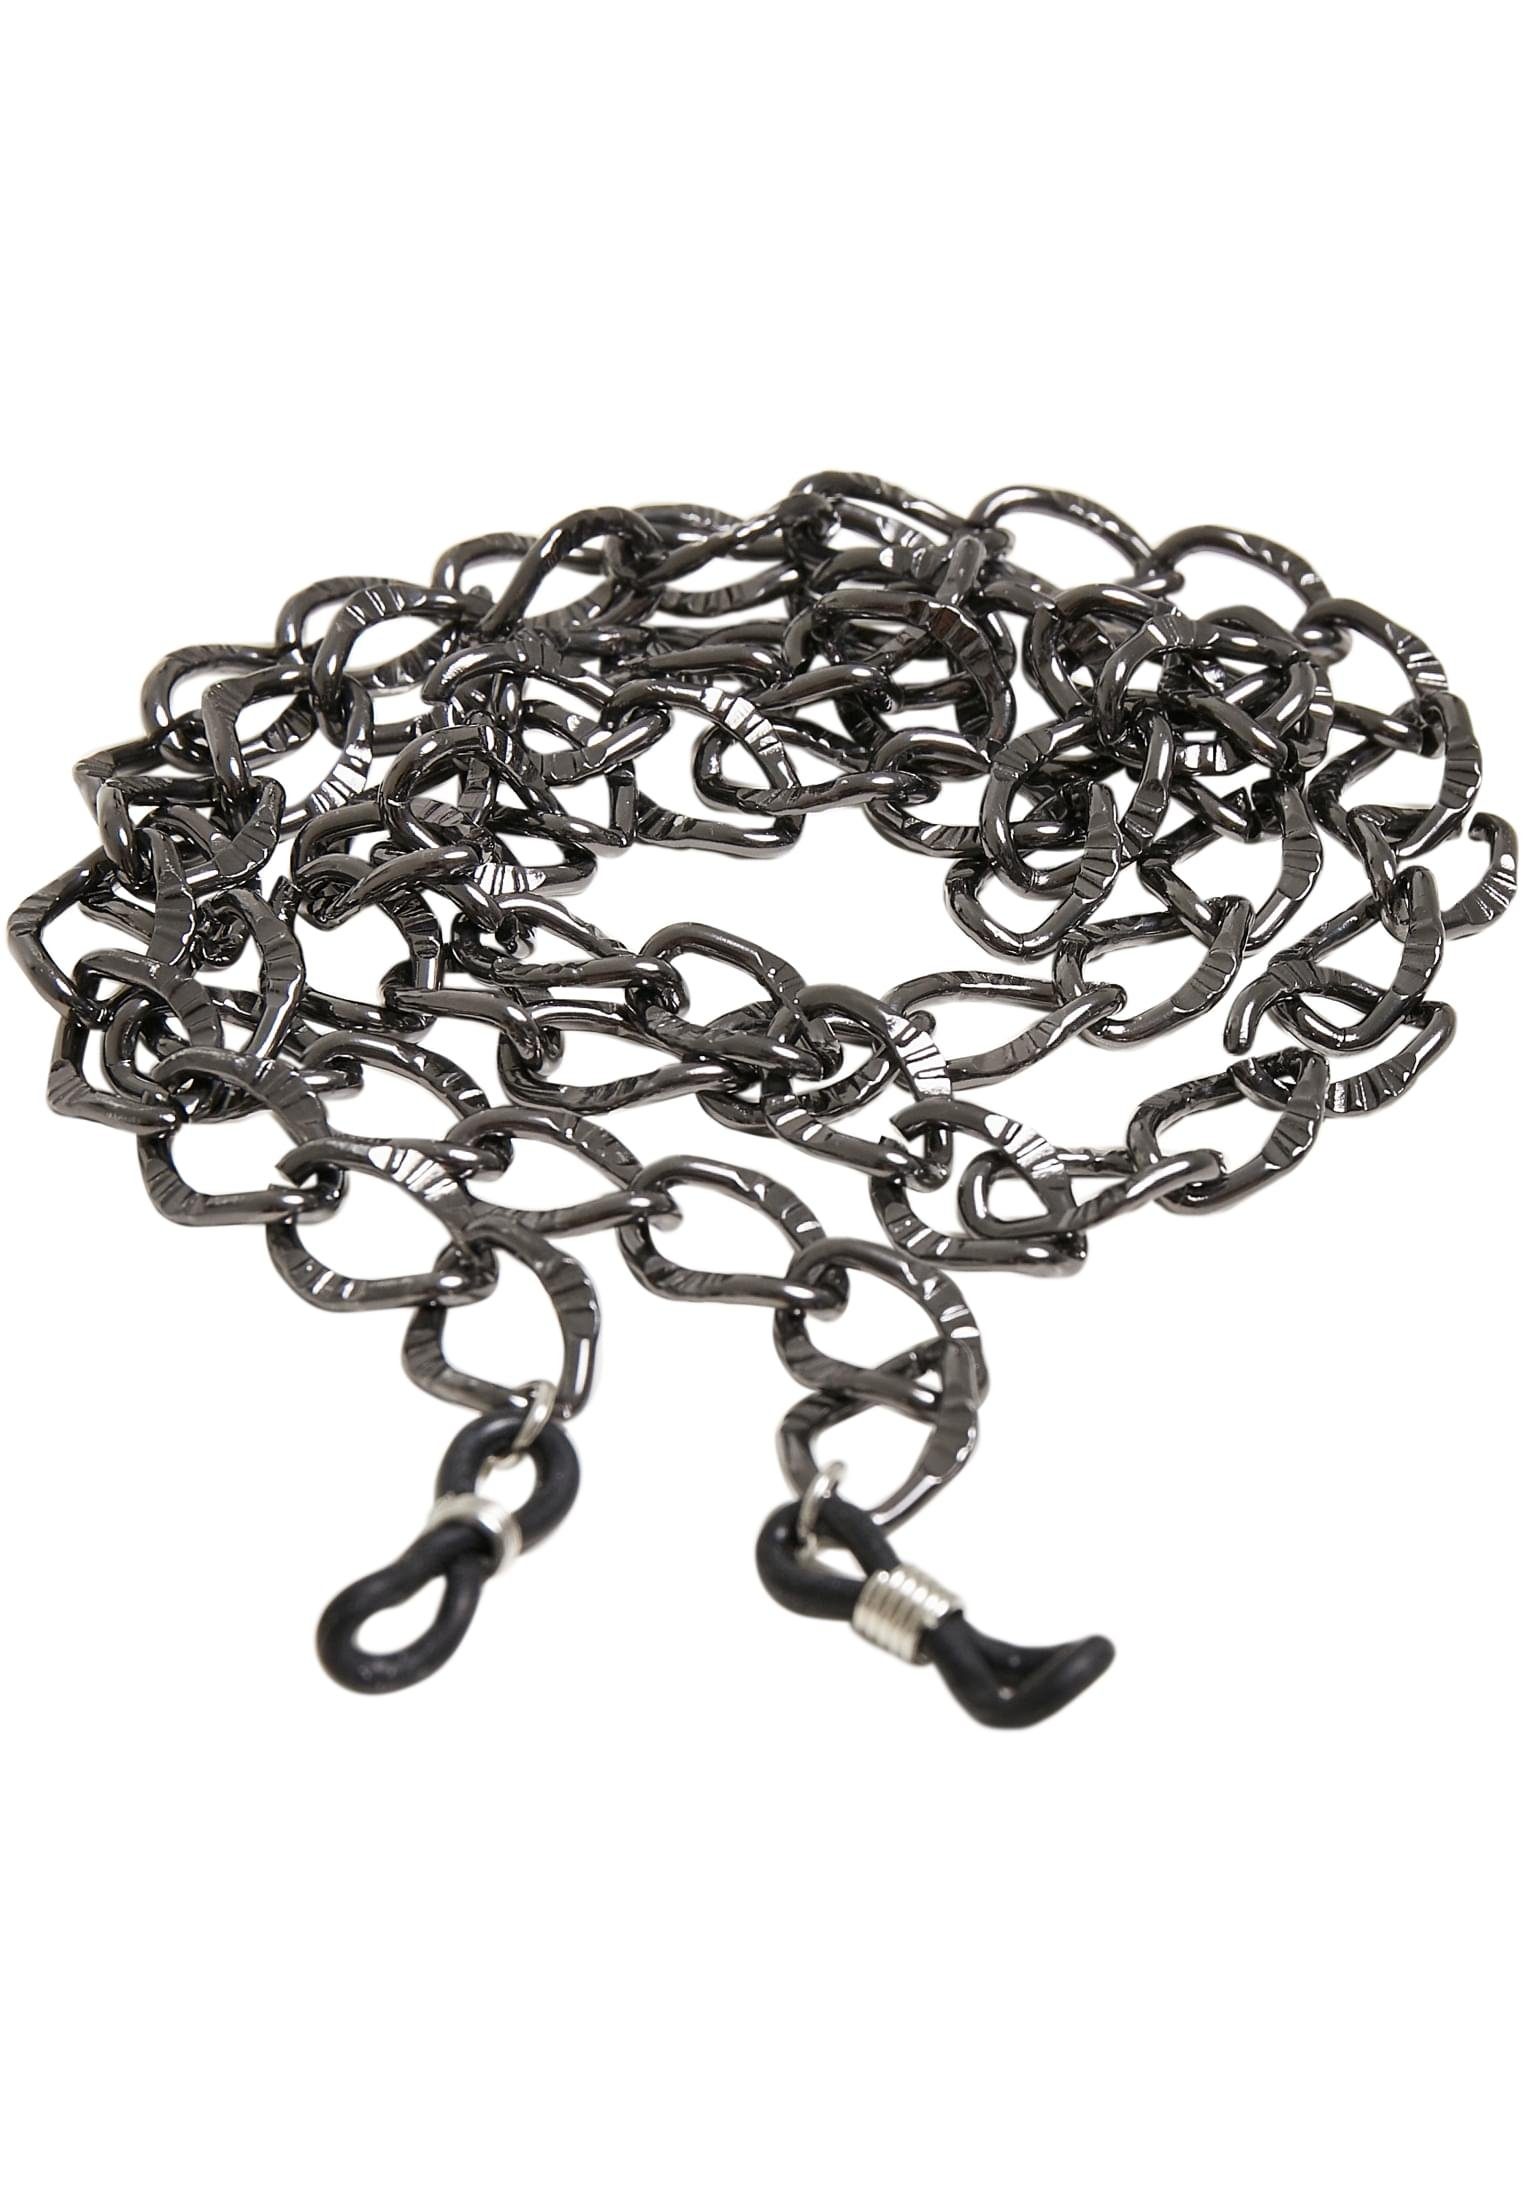 CLASSICS URBAN Chain with Sonnenbrille Zakynthos Sunglasses Accessoires black/silver